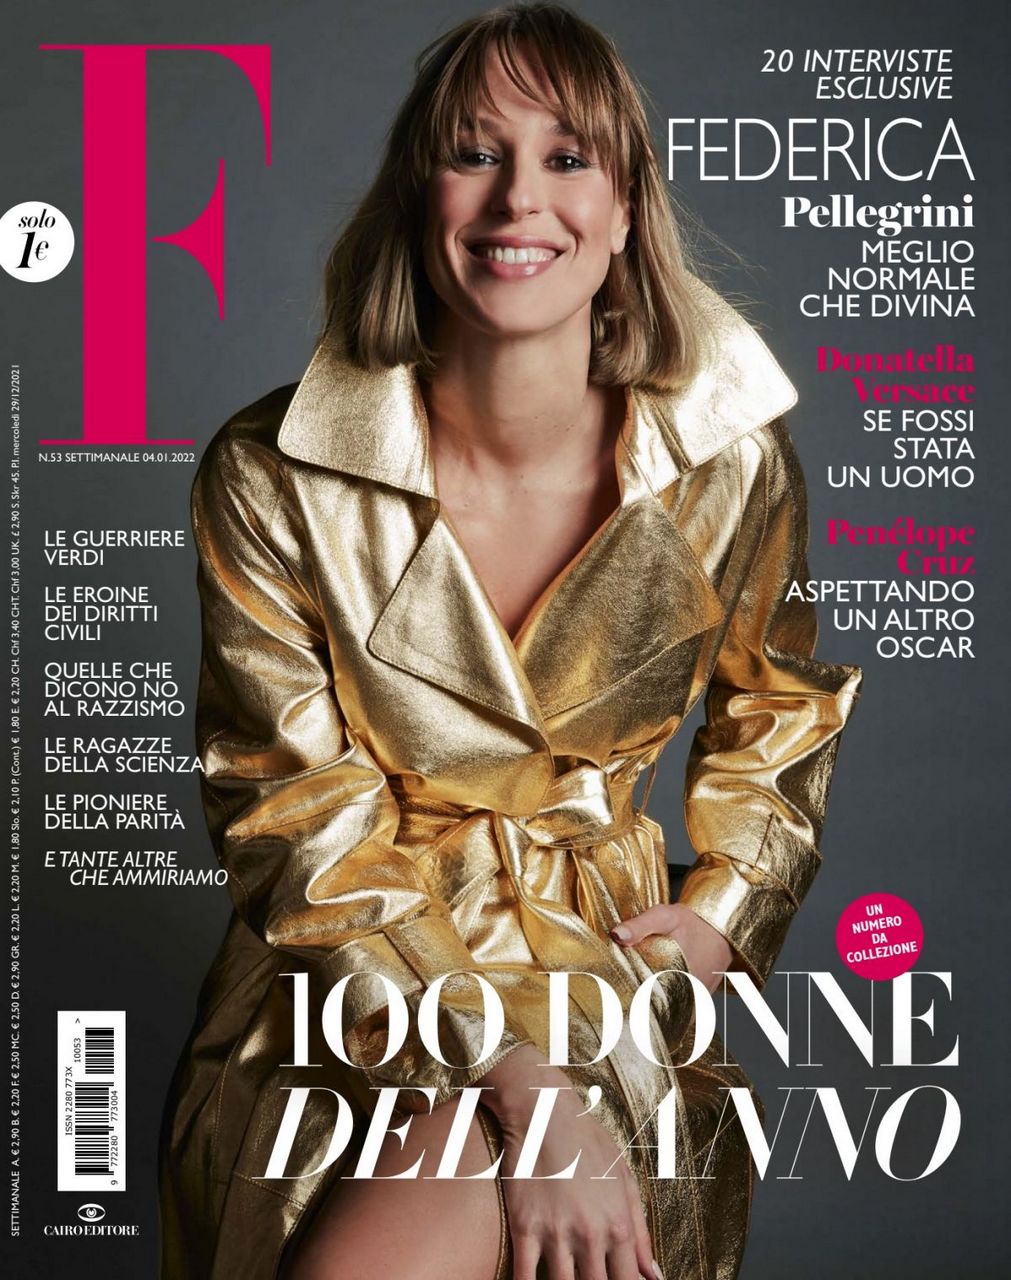 Federica Pellegrini For F Magazine January